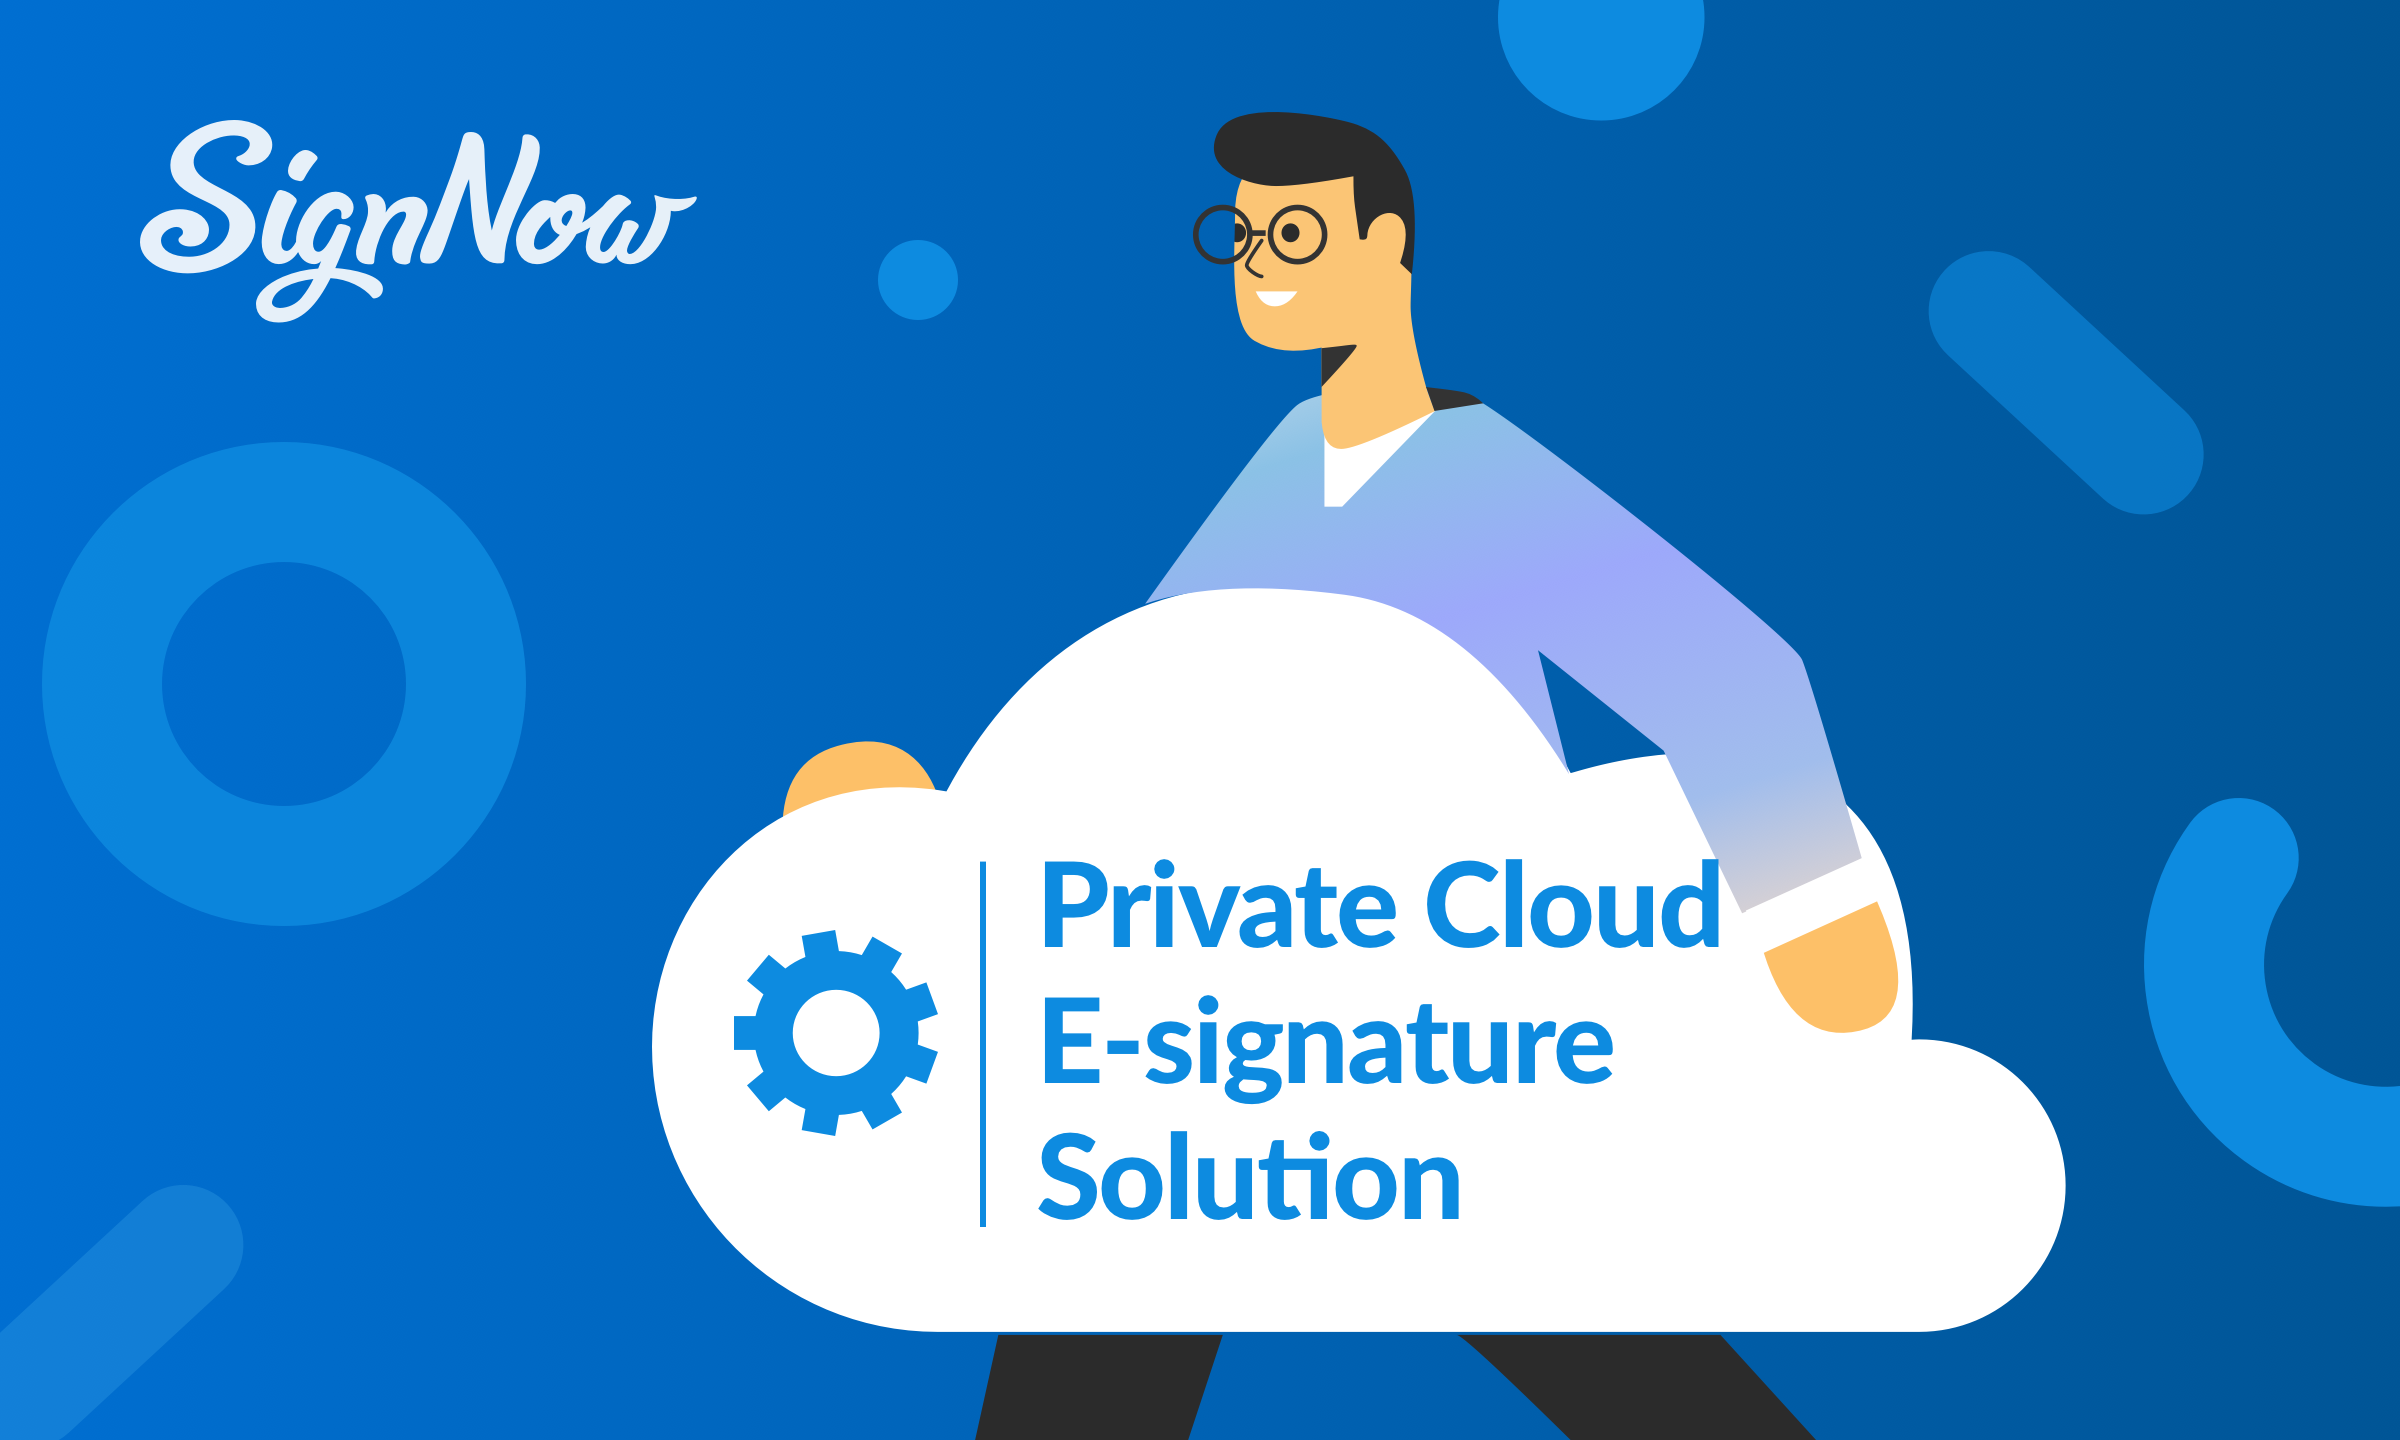 Private Cloud E-signature Solution